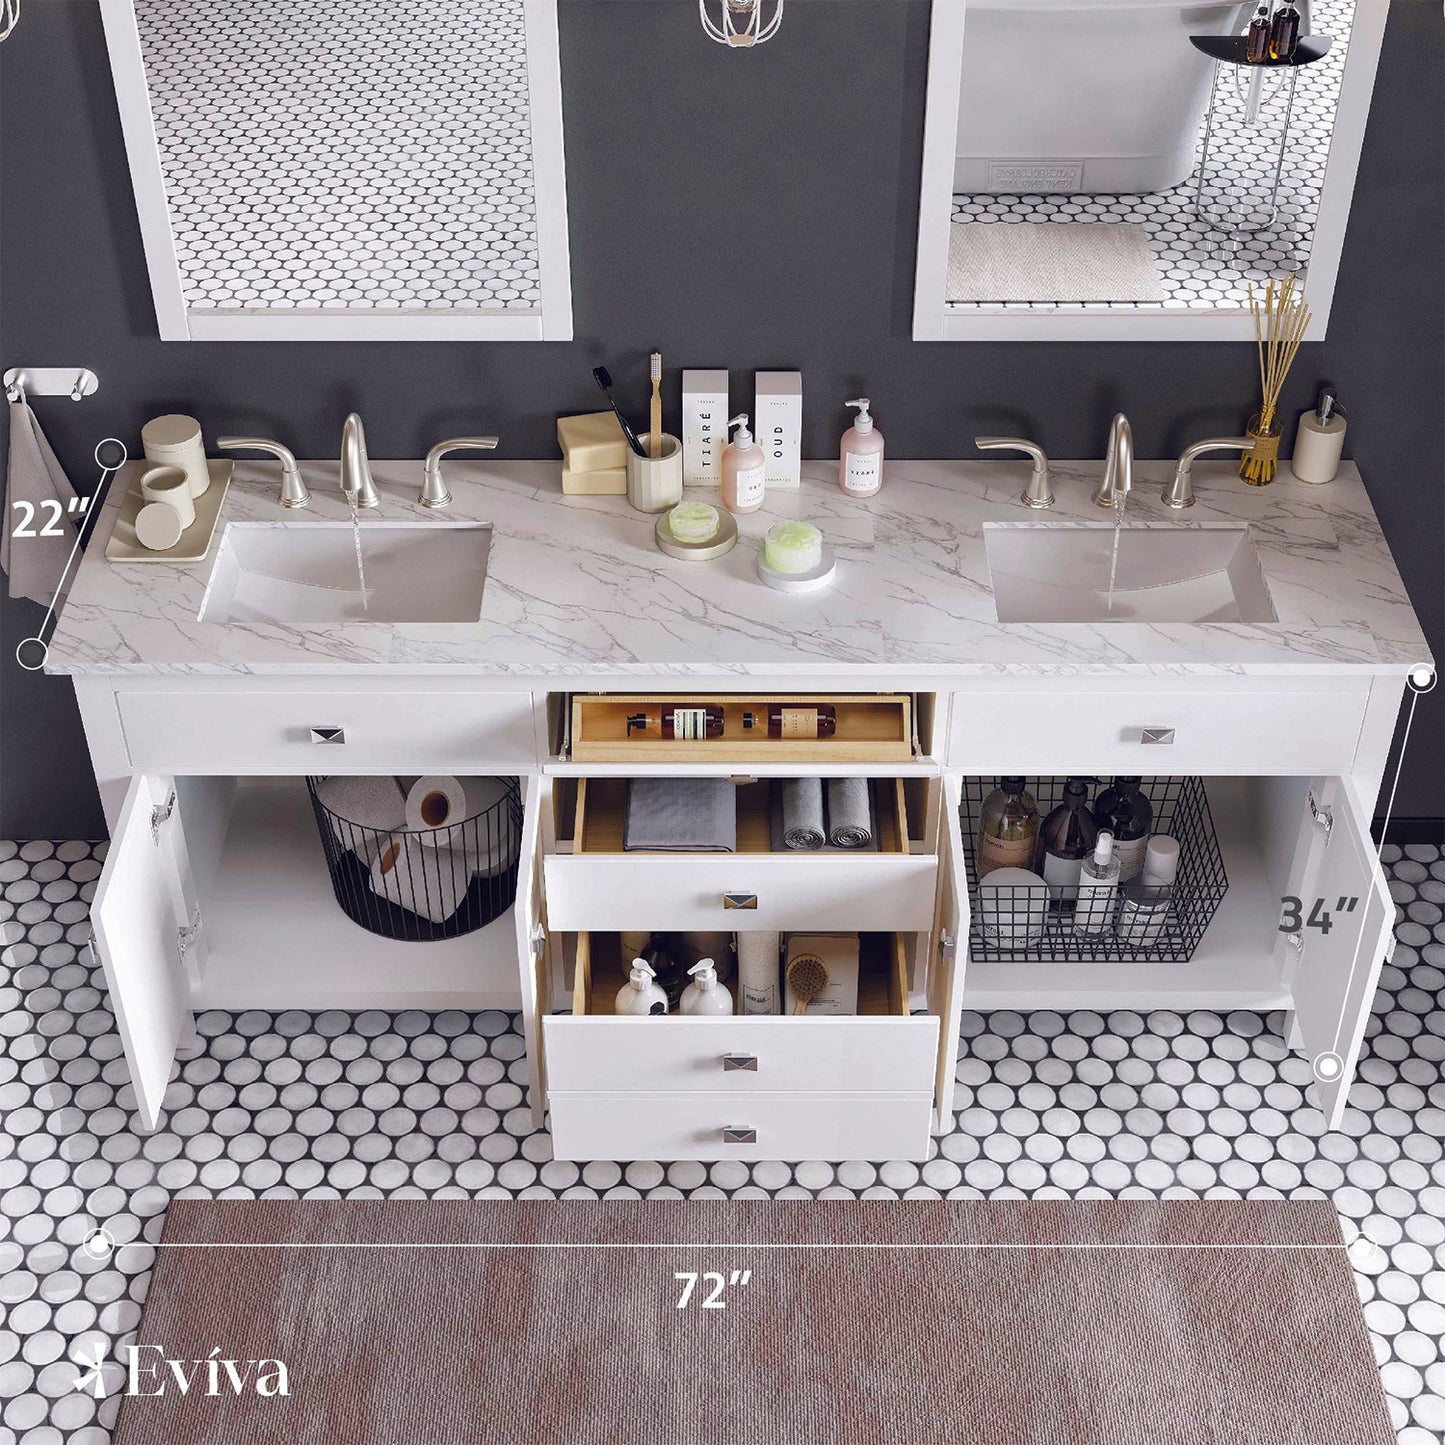 Artemis 72"W x 22"D White Double Sink Bathroom Vanity with Carrara Quartz Countertop and Undermount Porcelain Sink